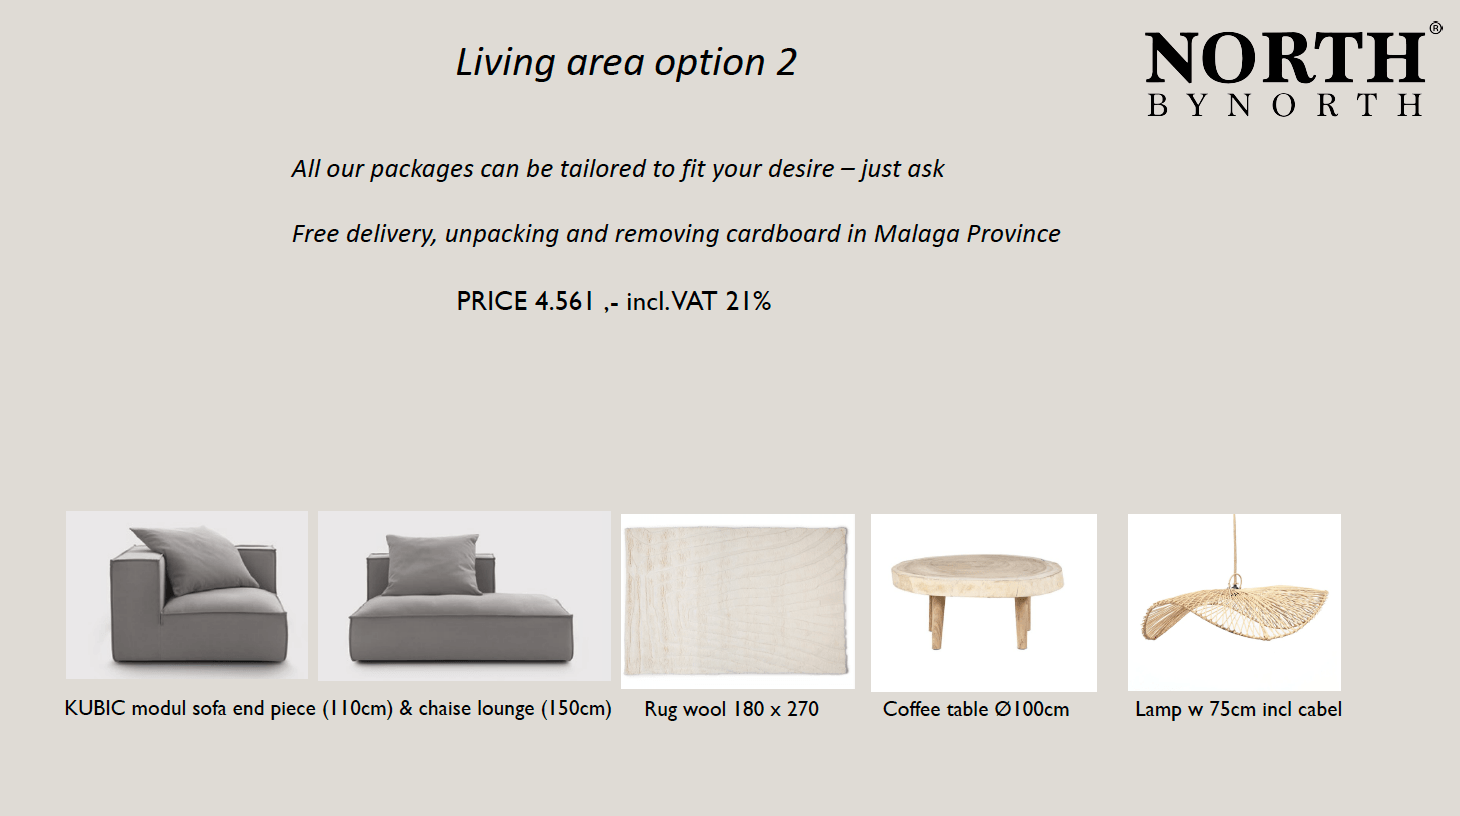 Living area option 2